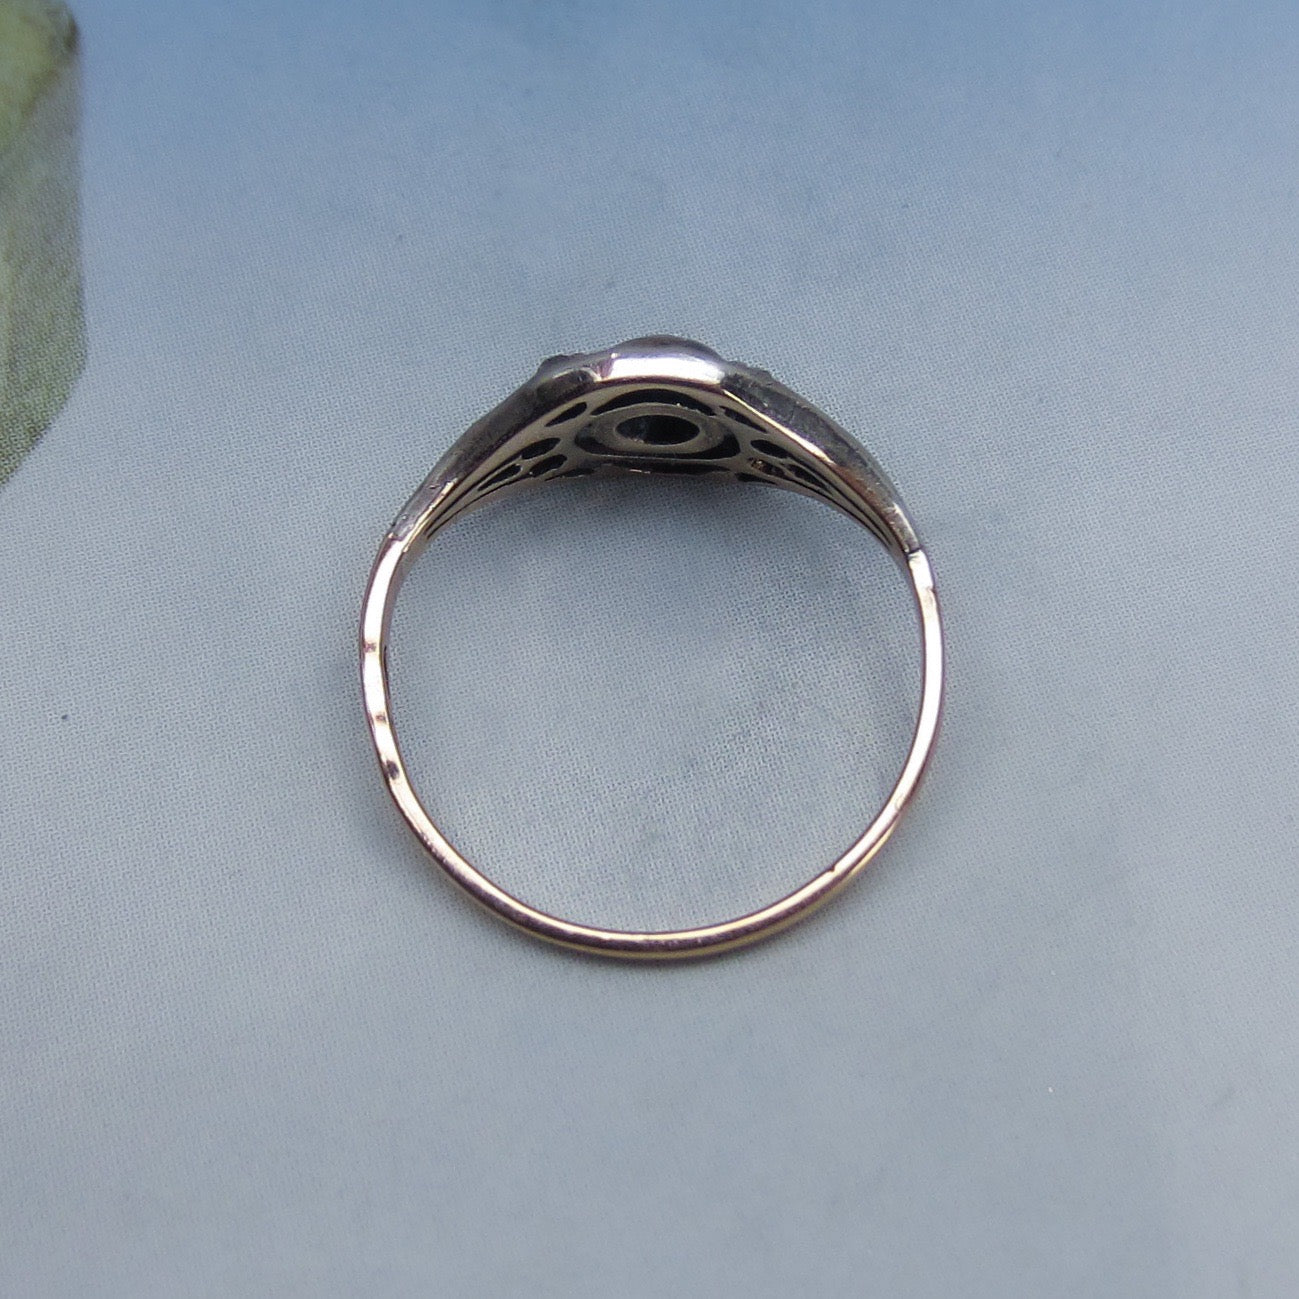 SOLD--Edwardian Diamond Openwork Ring Silver/14k, Austria c. 1910